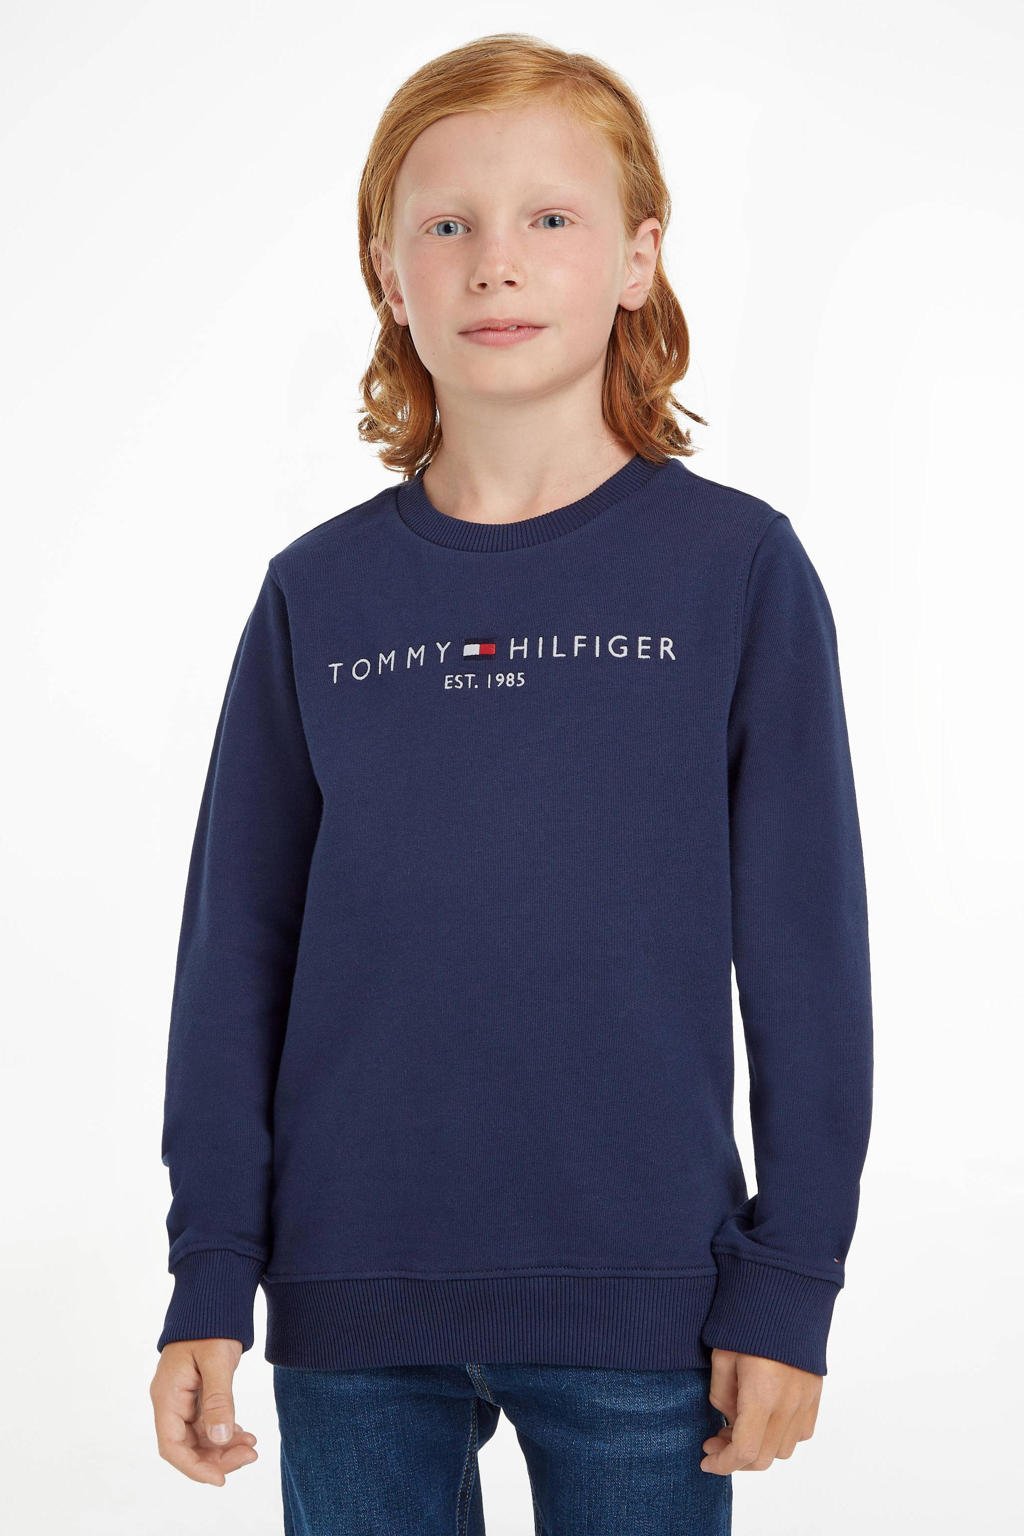 Donkerblauwe jongens en meisjes Tommy Hilfiger unisex sweater met logo dessin, lange mouwen en ronde hals